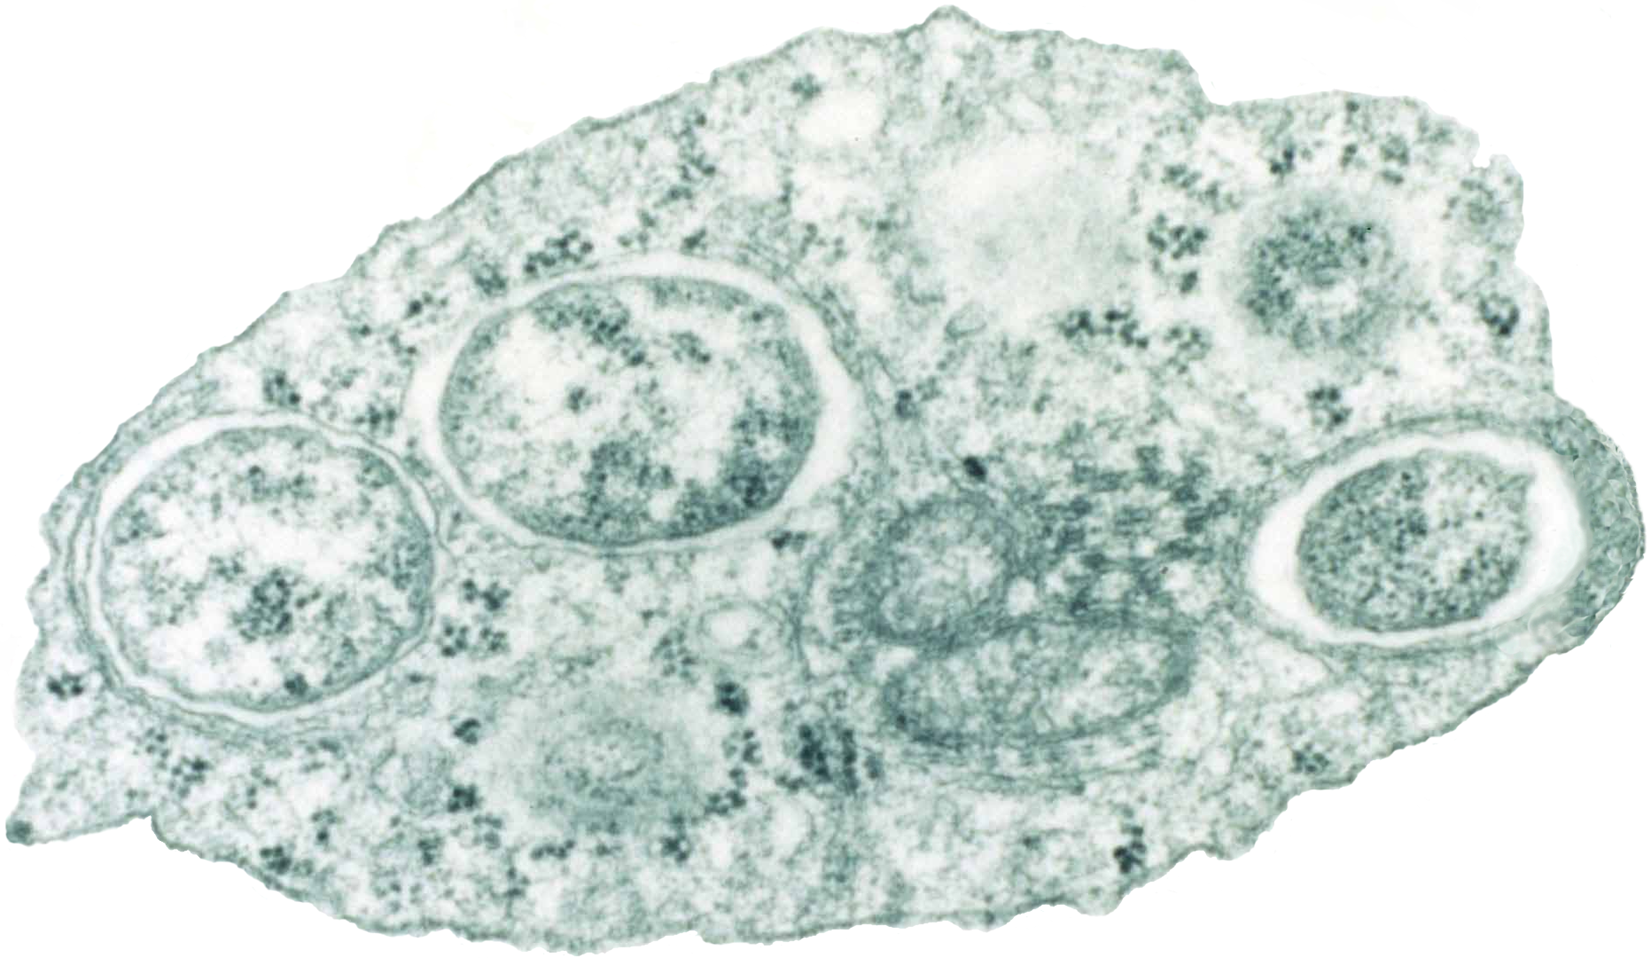 micrograph of the wolbachia bacterium